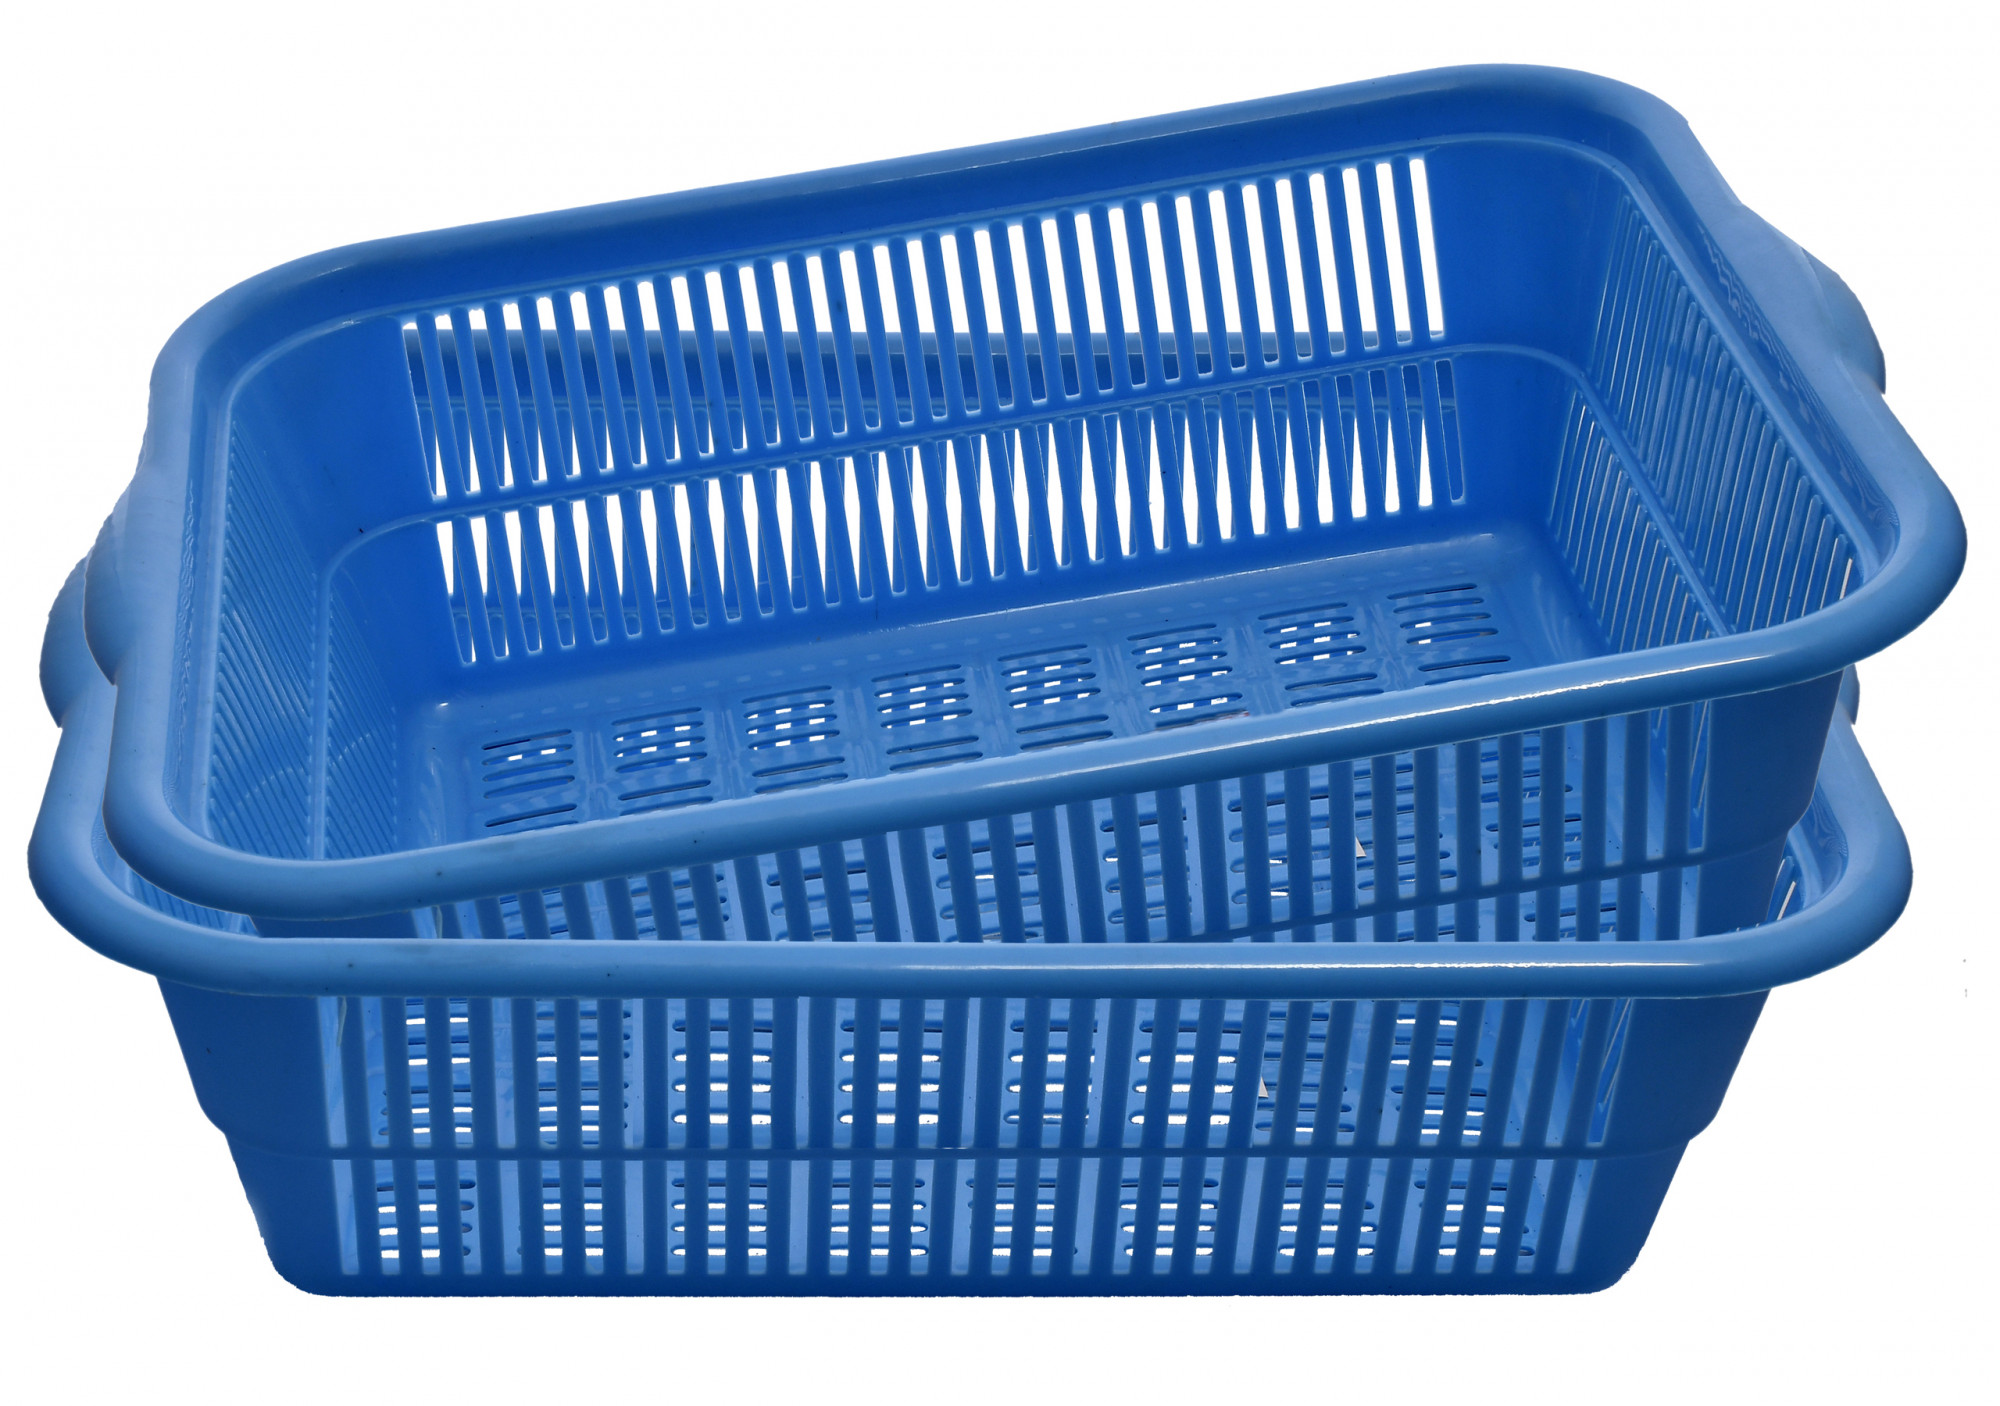 Kuber Industries Plastic Kitchen Small Size Dish Rack Drainer Vegetables And Fruits Washing Basket Dish Rack Multipurpose Organizers (Blue)-KUBMART570